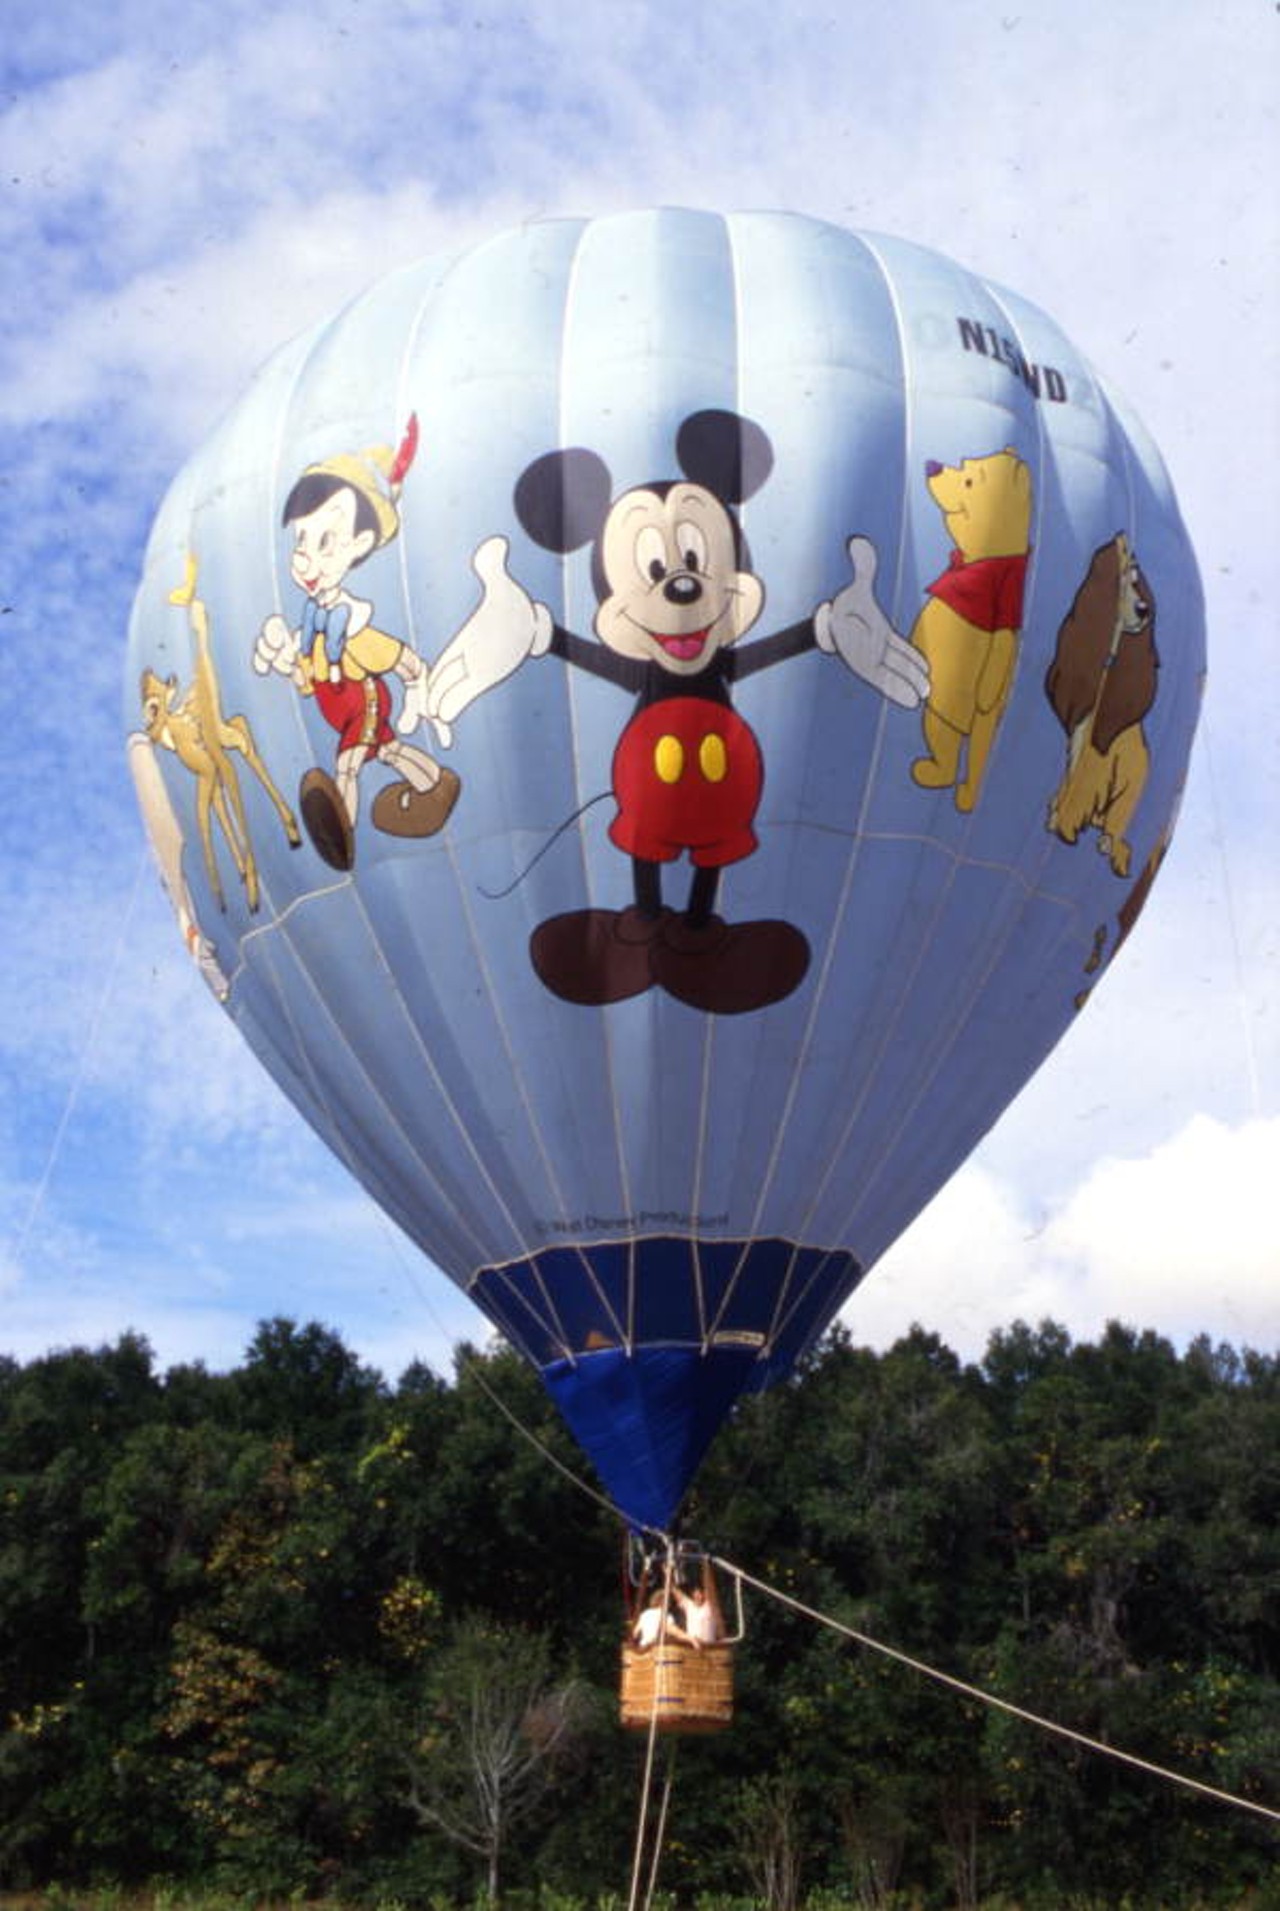 Hot air balloon at the Magic Kingdom amusement park in Orlando, Florida.